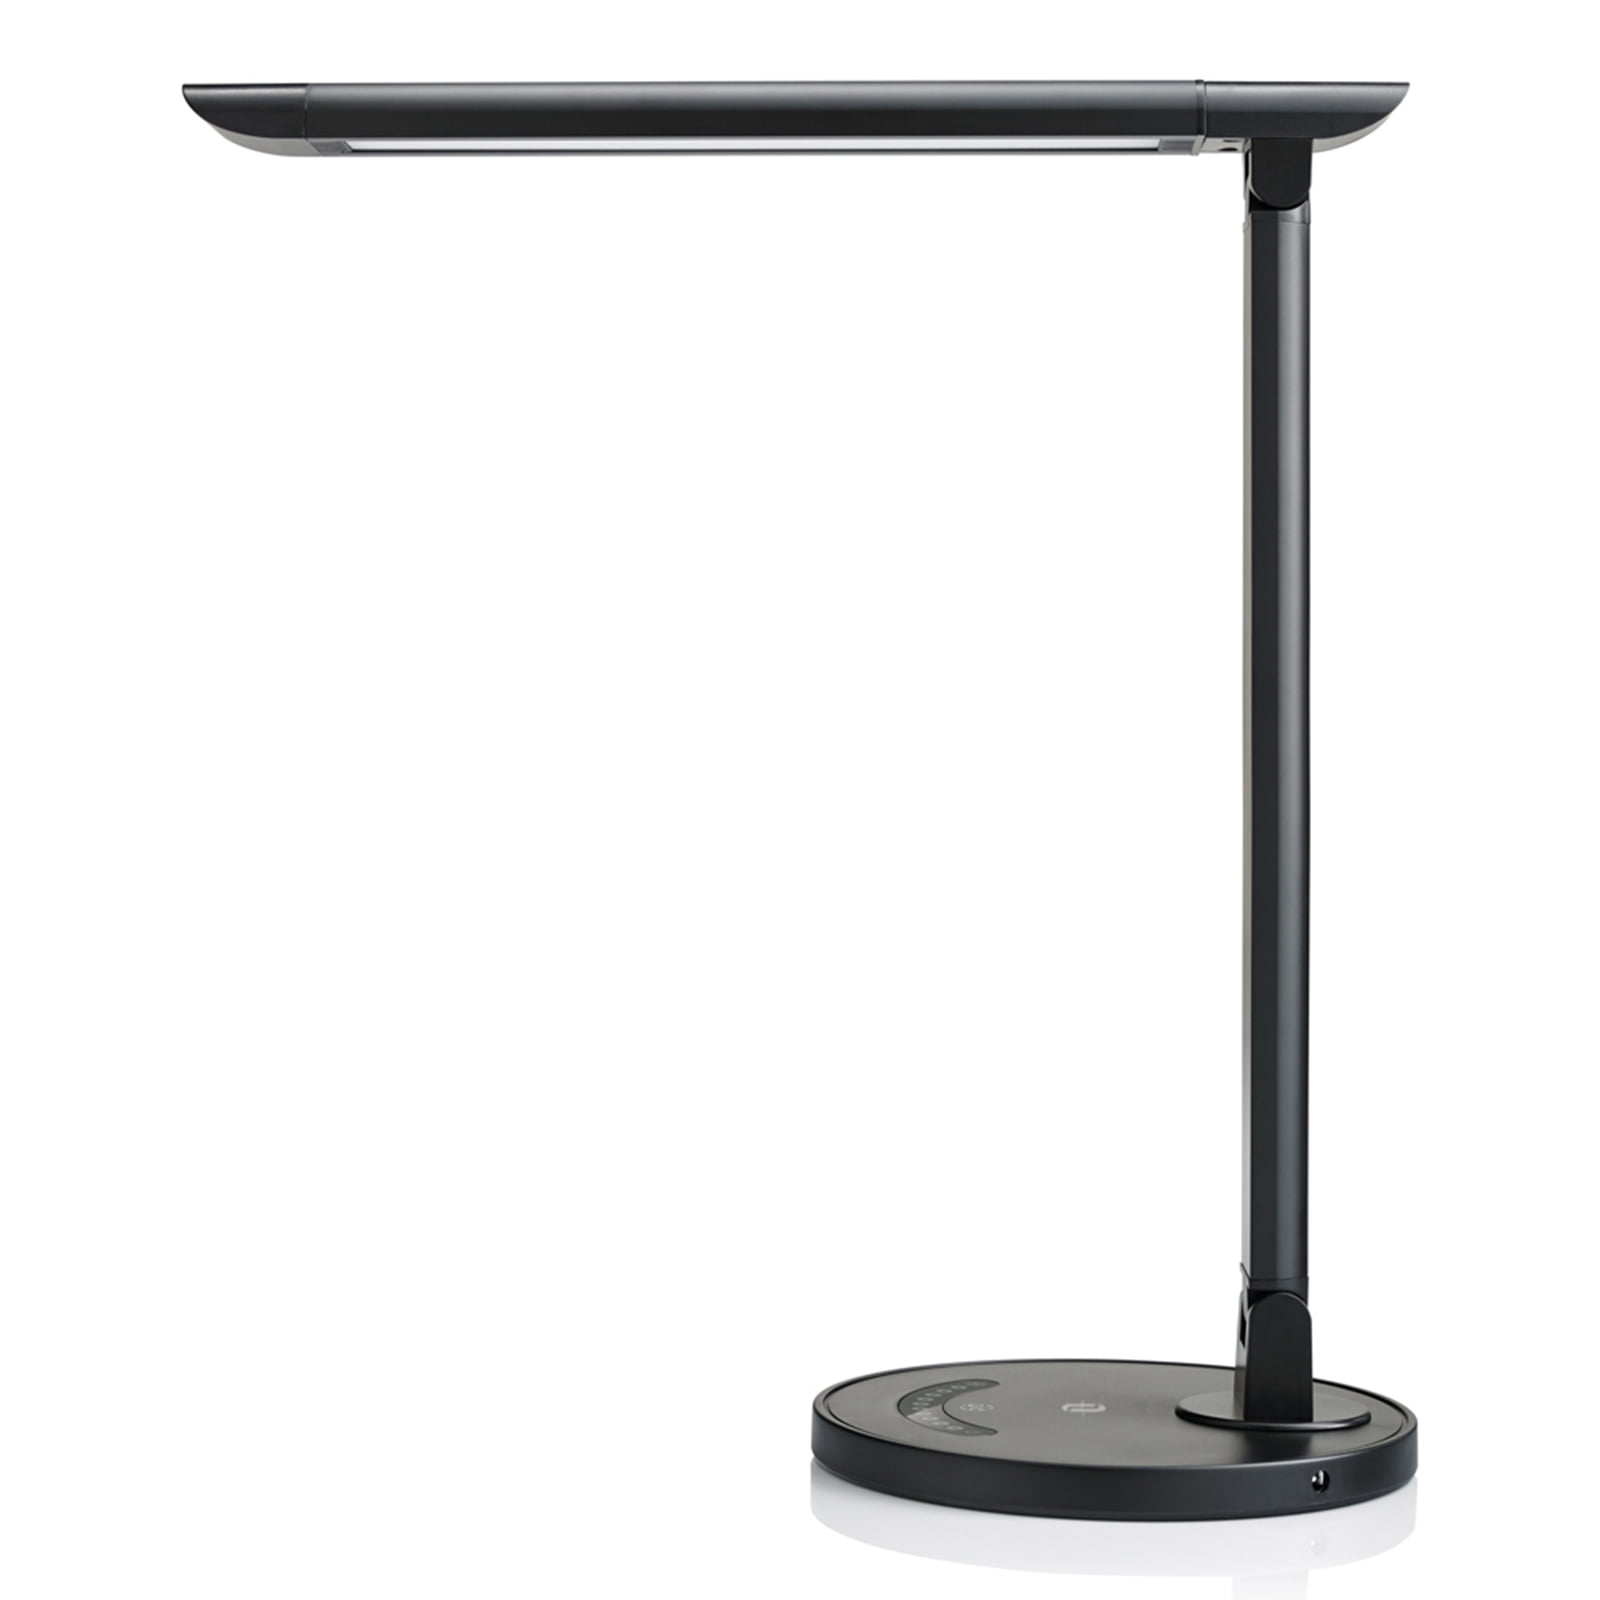 LED Desk Lamp Home Table Lamp 3 Levels Adjustable Night Light USB Port MT 